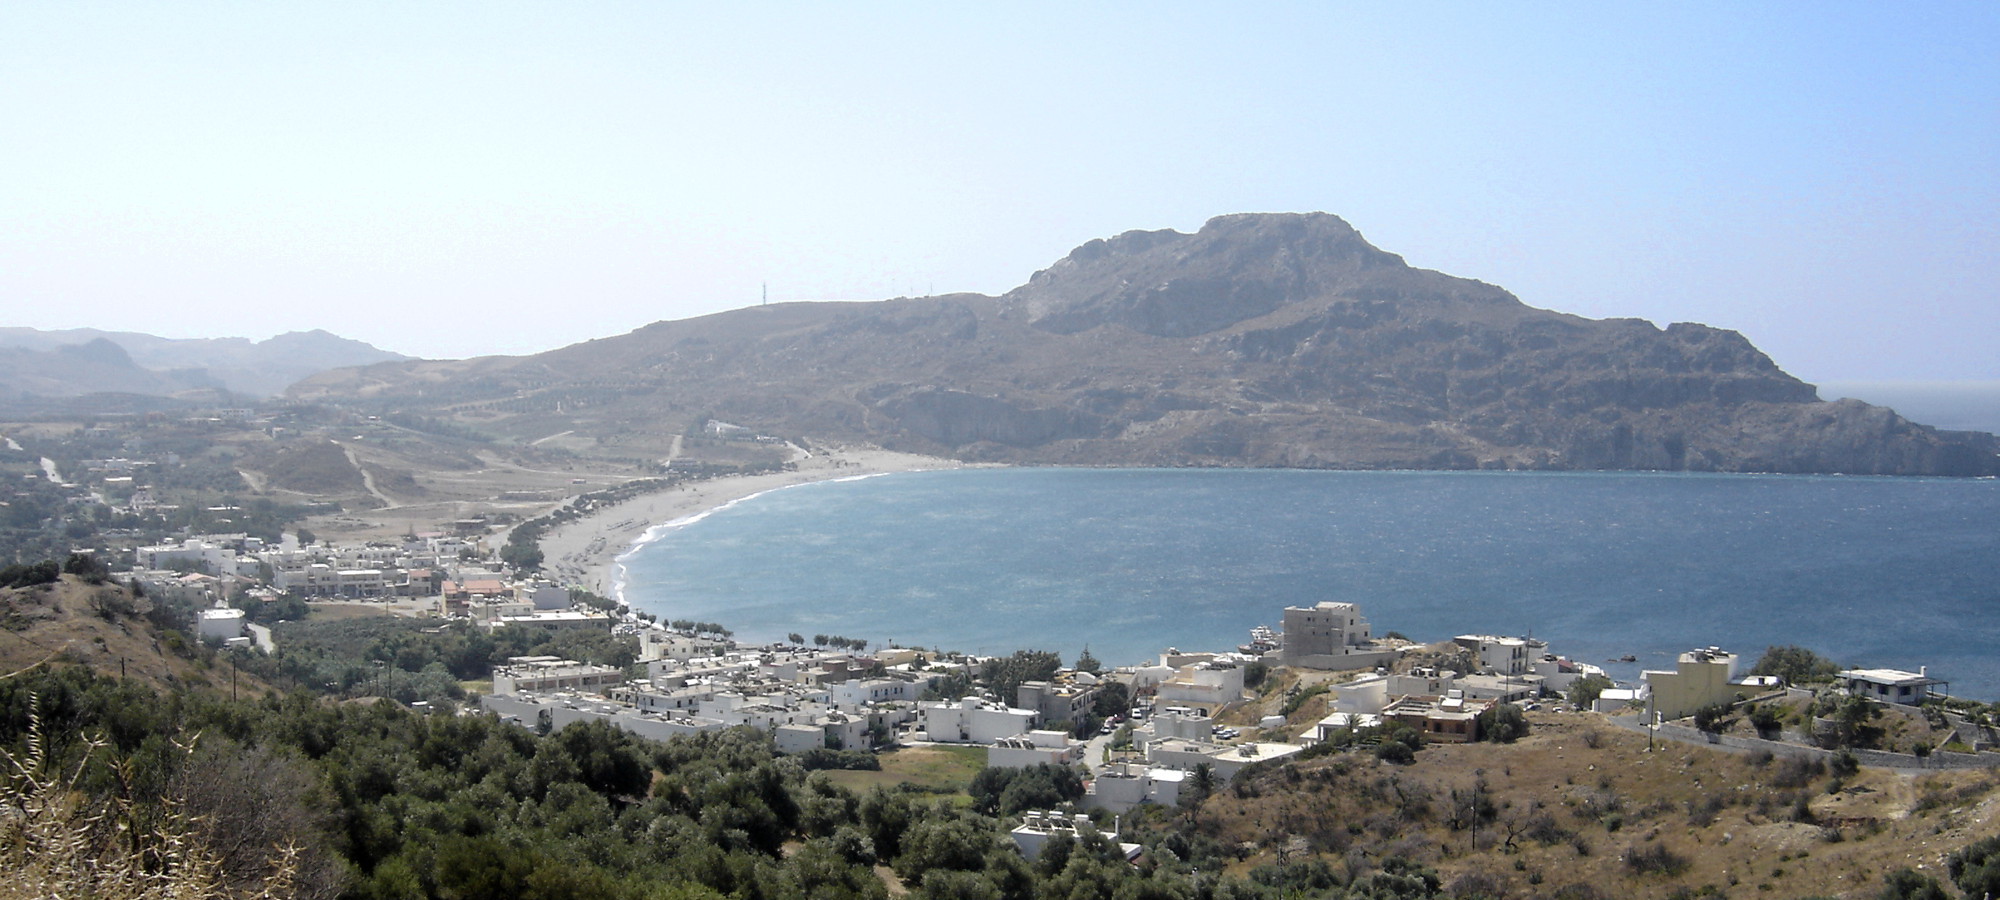 The Plakias Bay